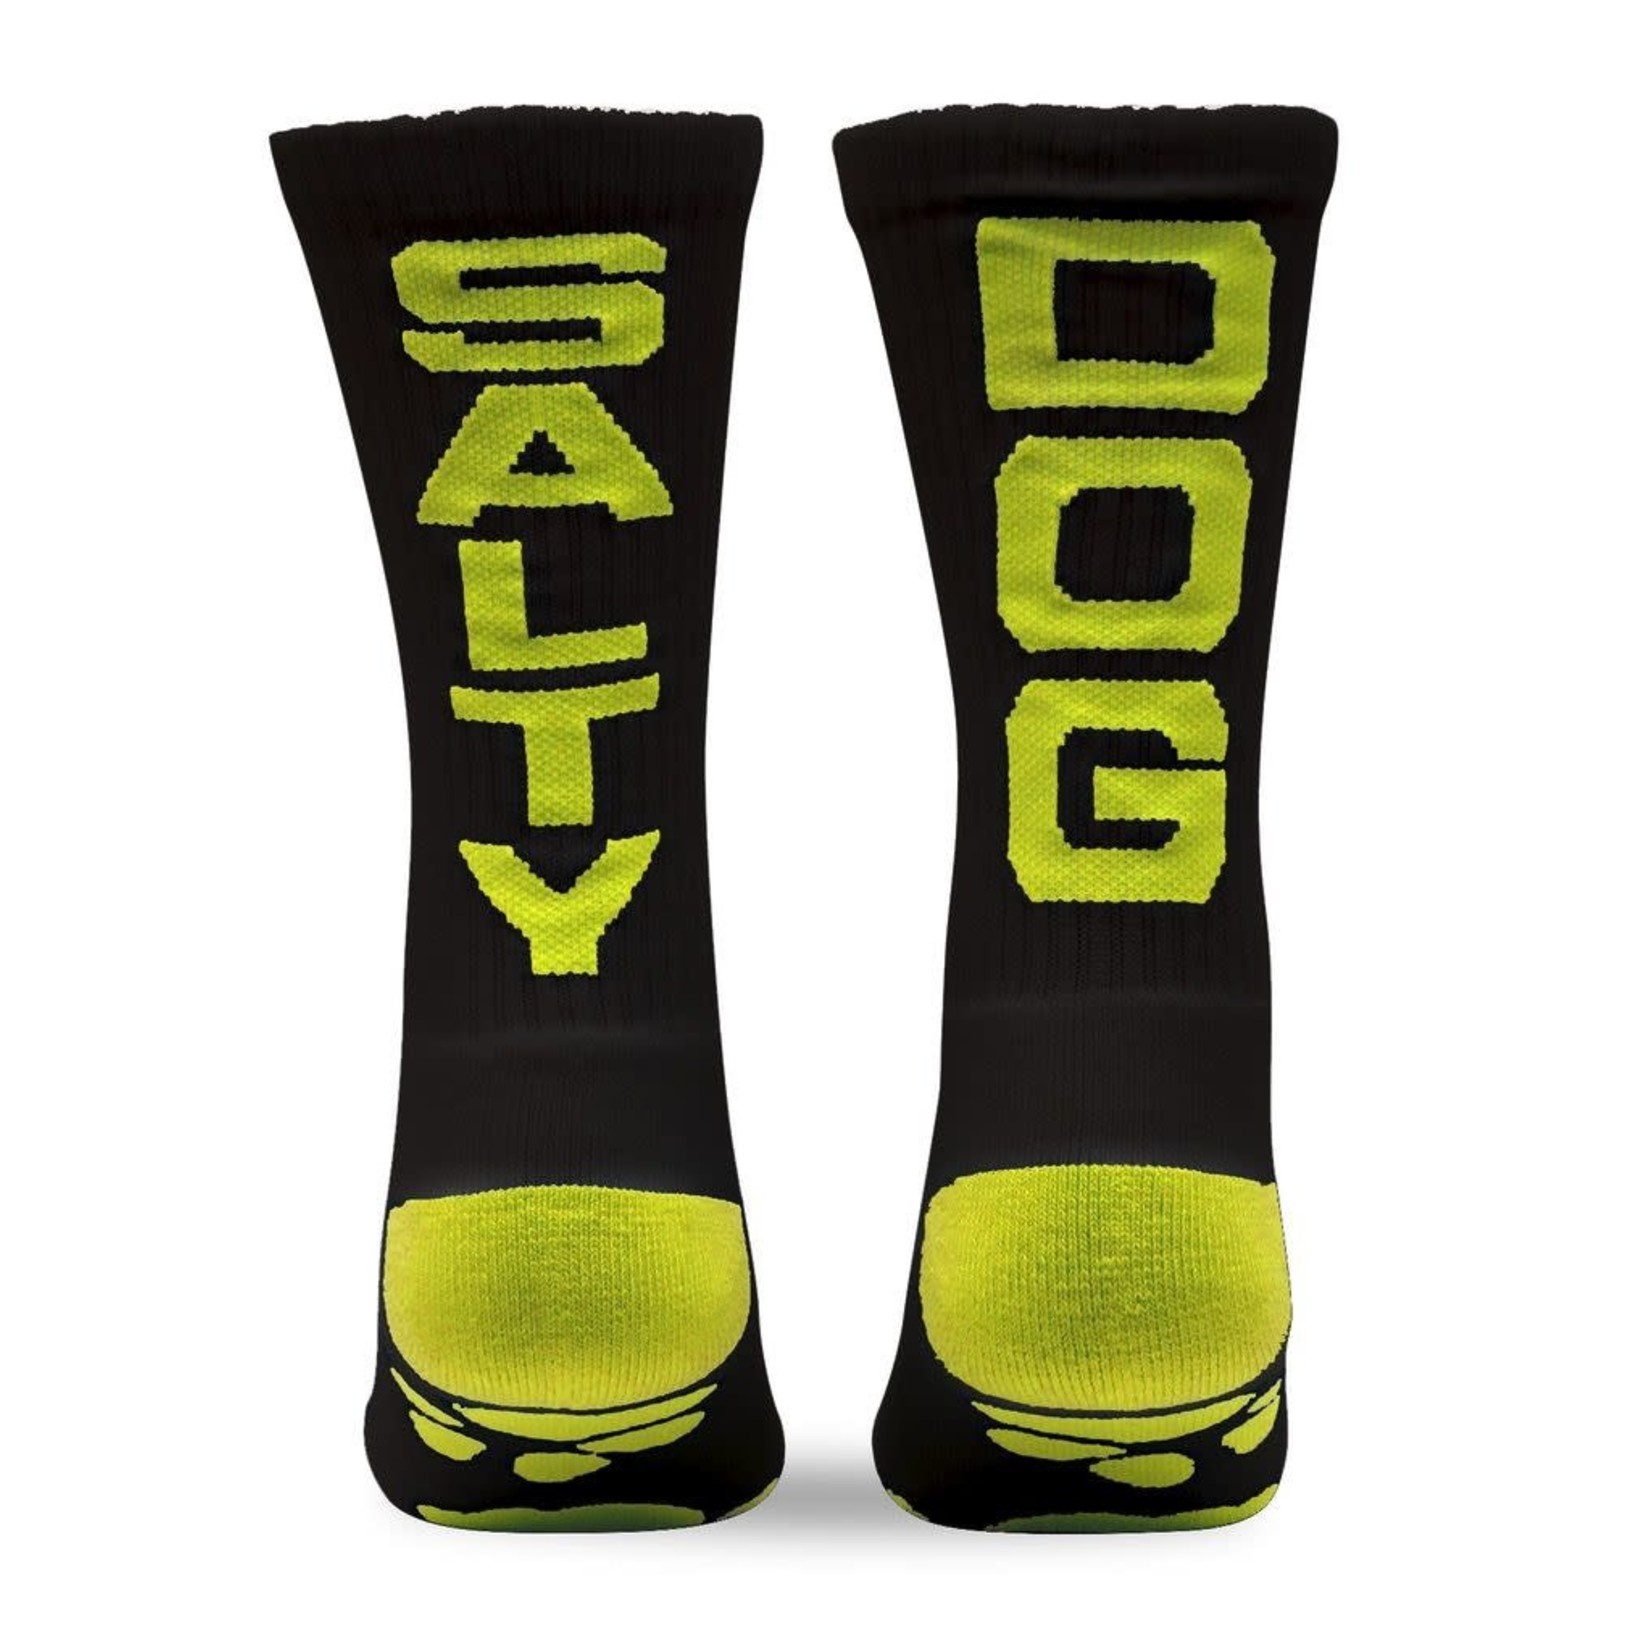 Youth Socks-Salty Dog, Black/Neon Yellow, OSFA